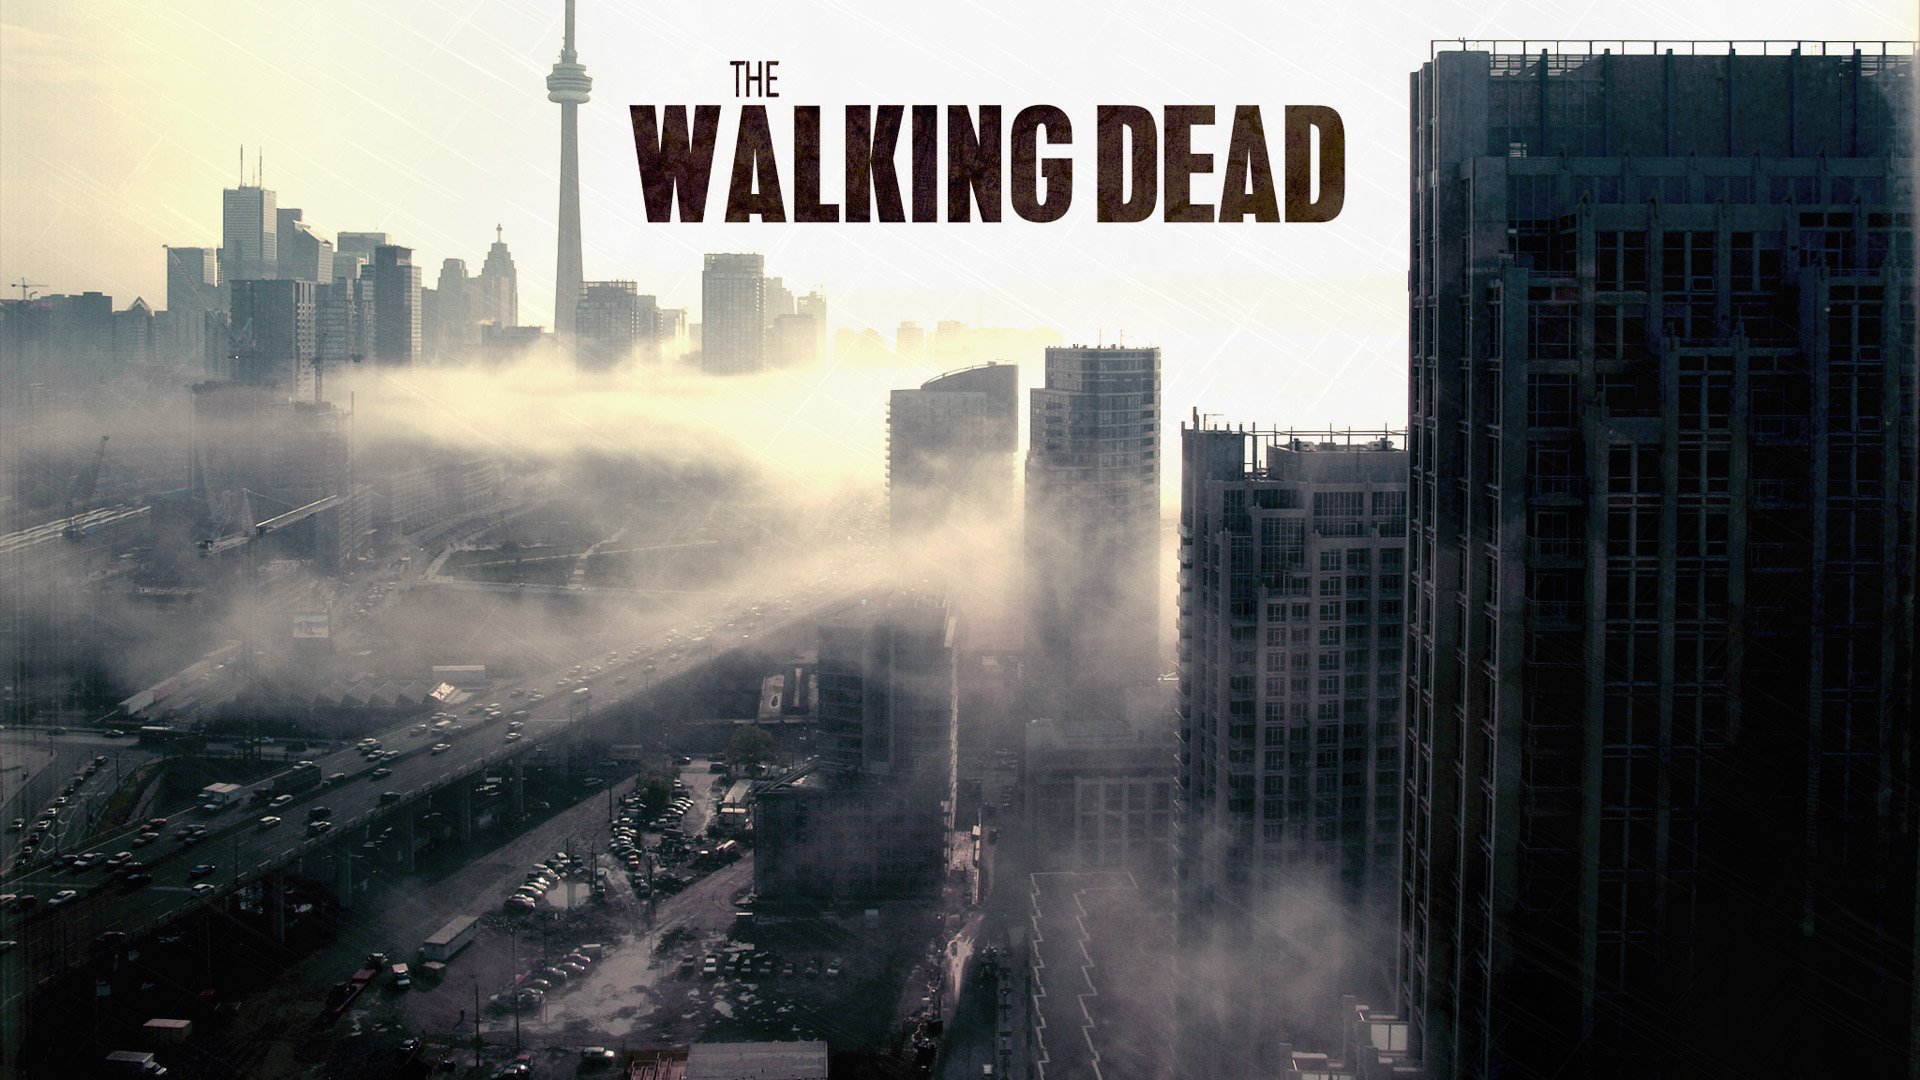 THE WALKING DEAD dark horror zombie series apocalyptic drama thriller